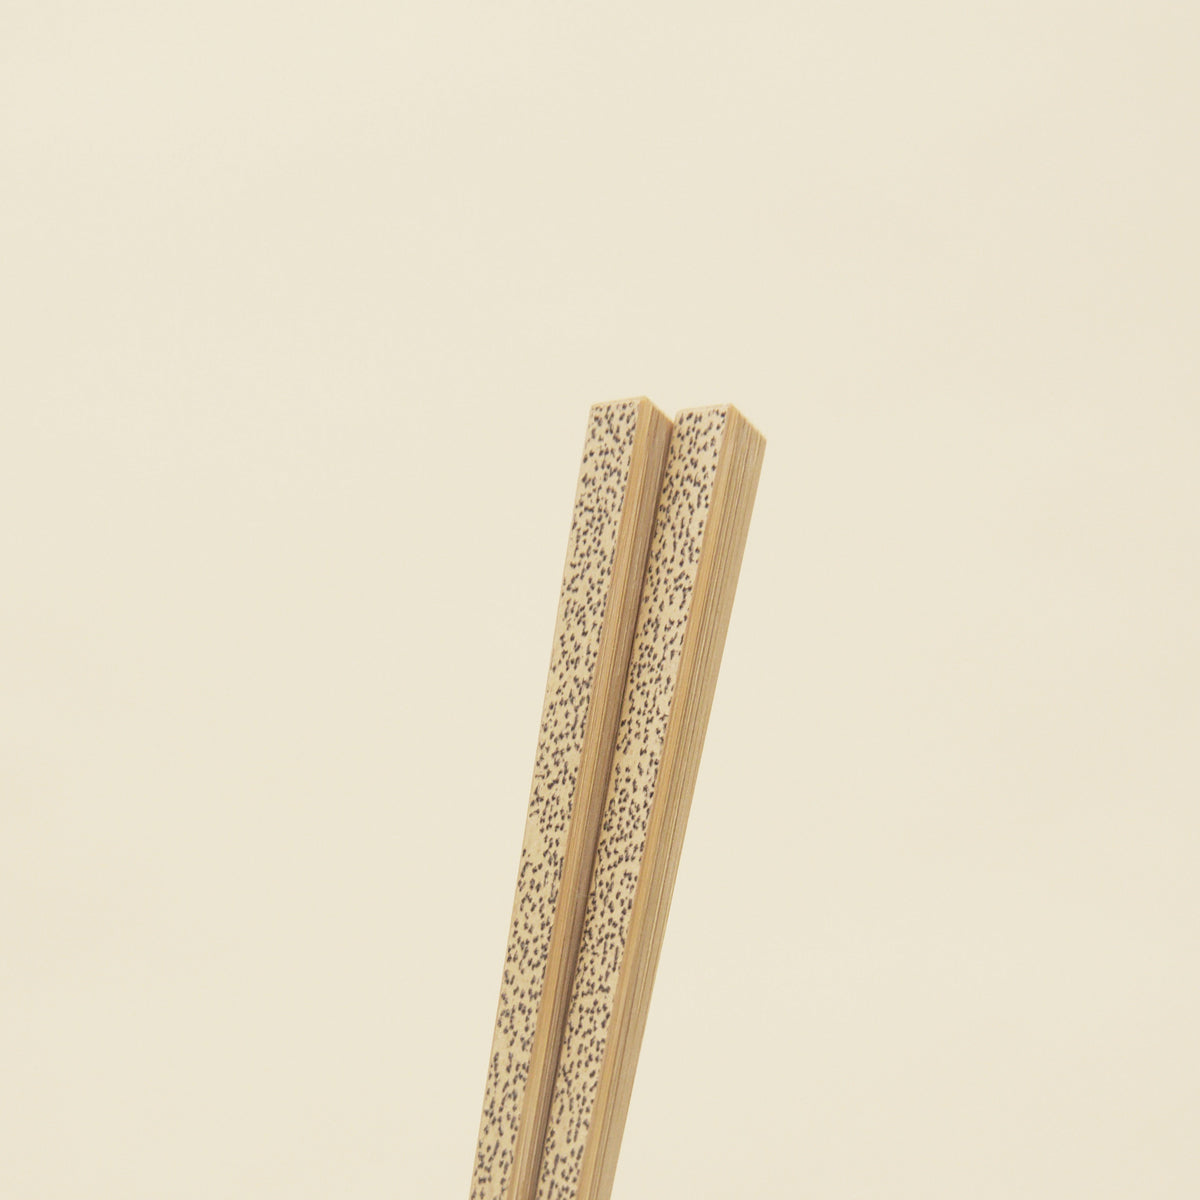 Skinny Bamboo Chopsticks - Sesame Pattern